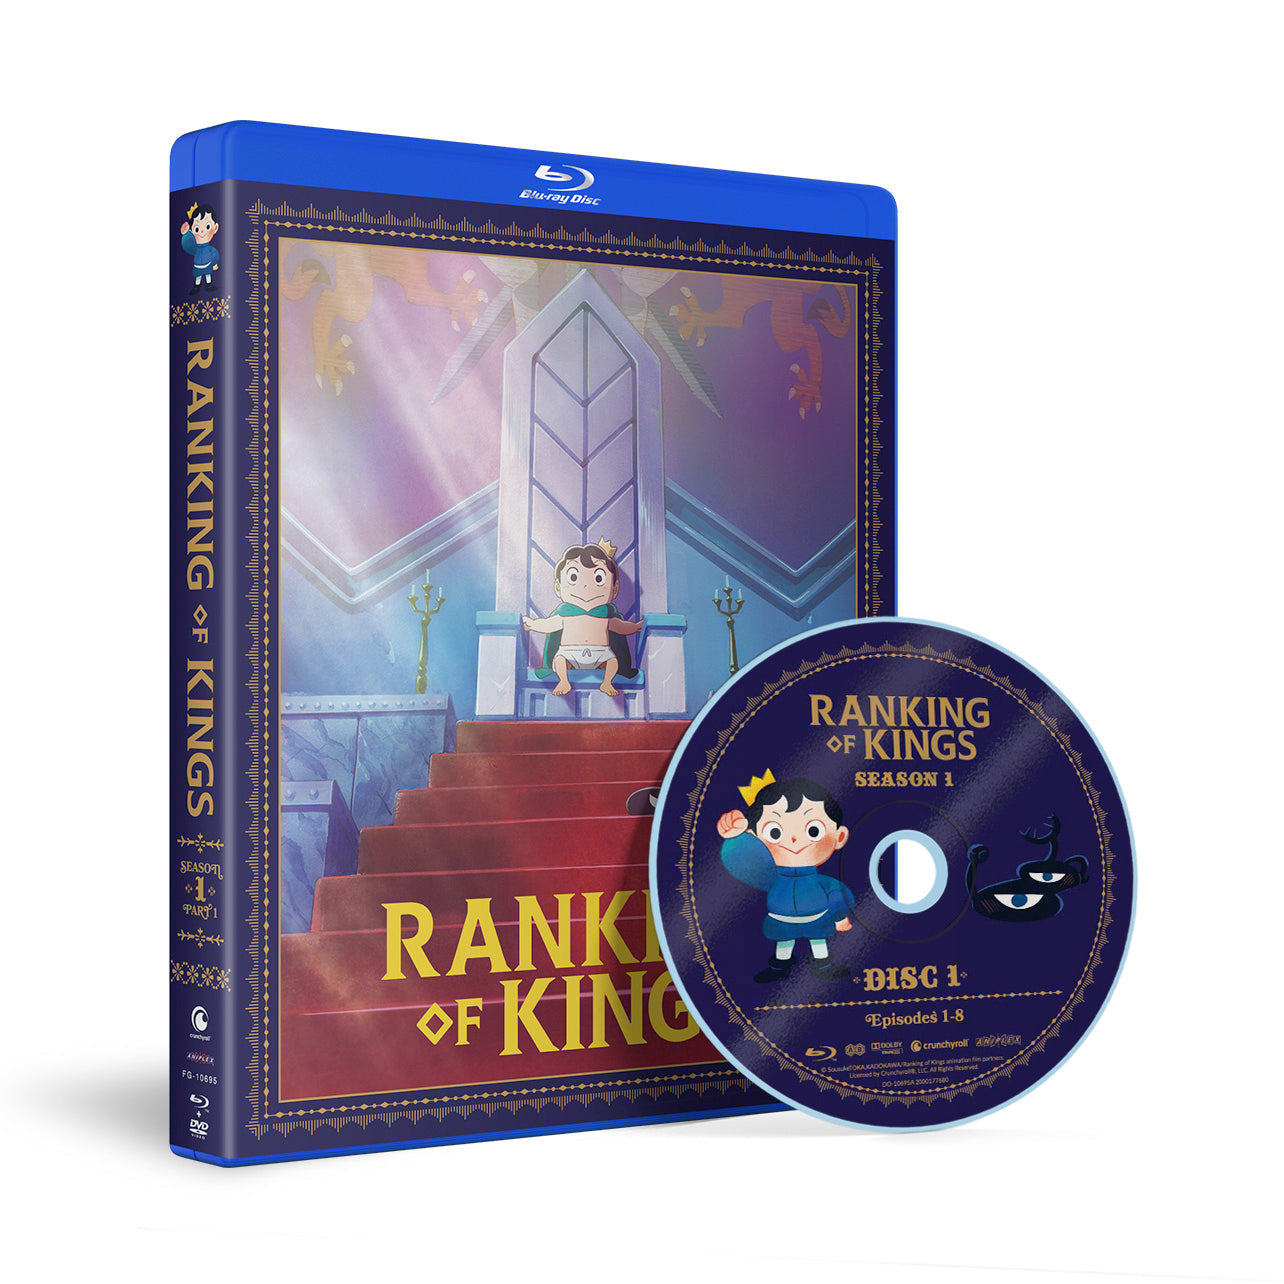 Ranking of Kings - Season 1 Part 1 - BD/DVD image count 1